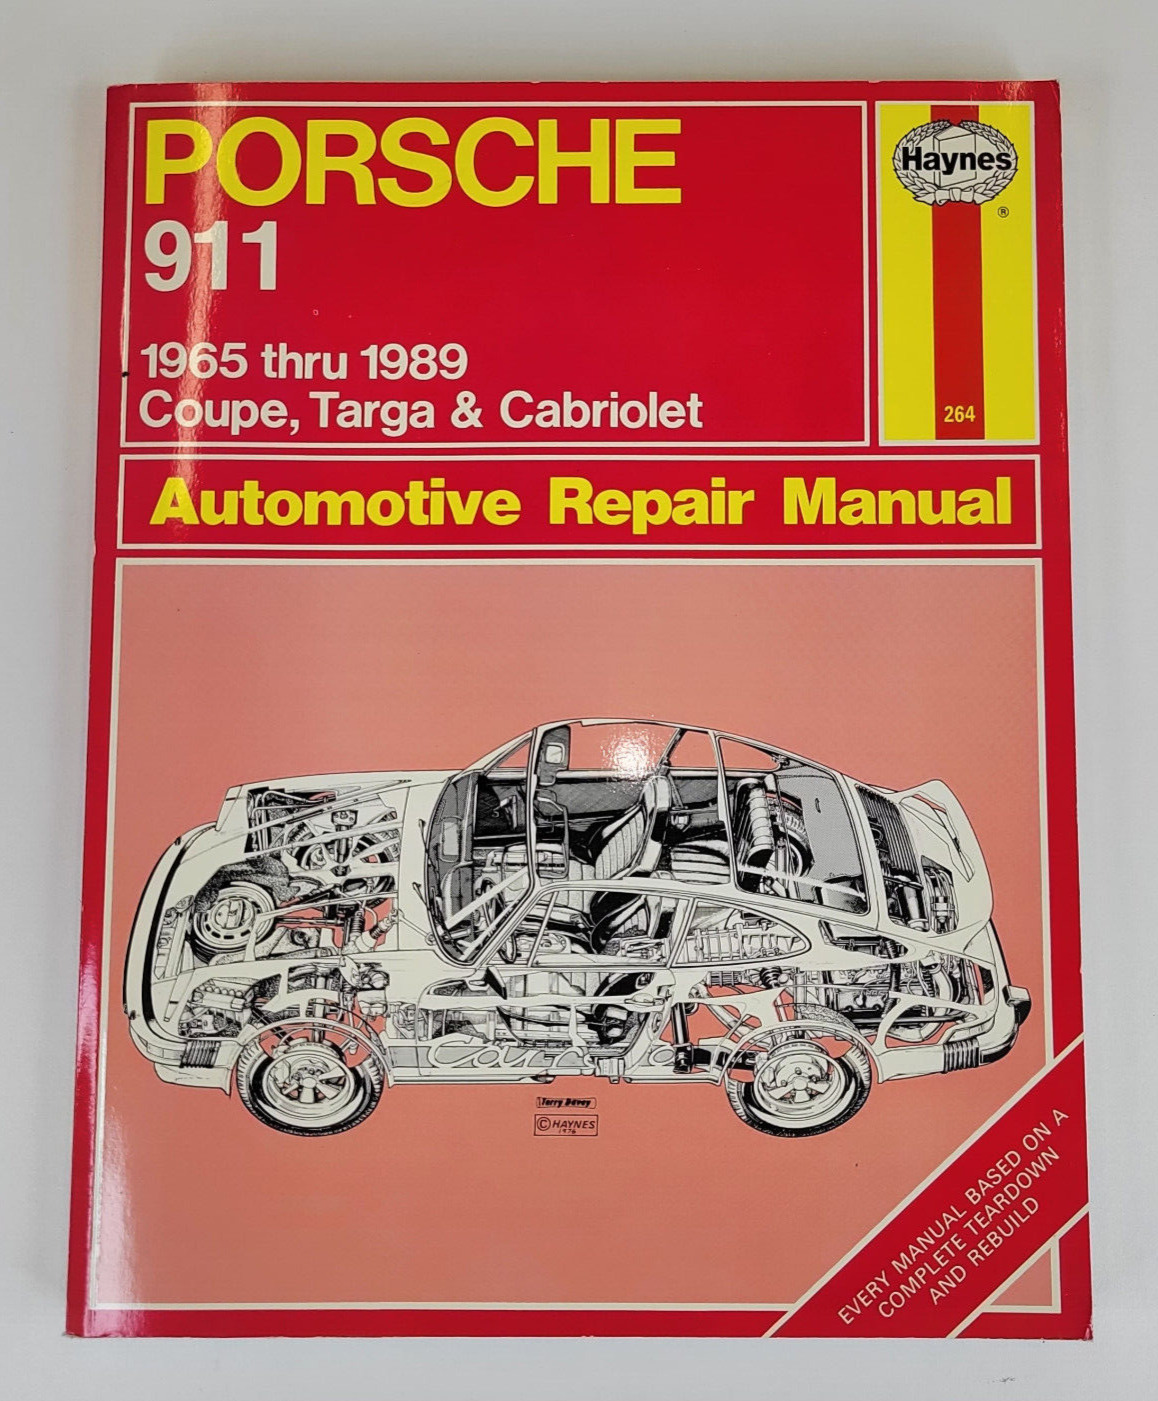 Haynes Porsche 911 1965 thru 1989 Coupe Targa & Cabriolet Repair Manual Like New